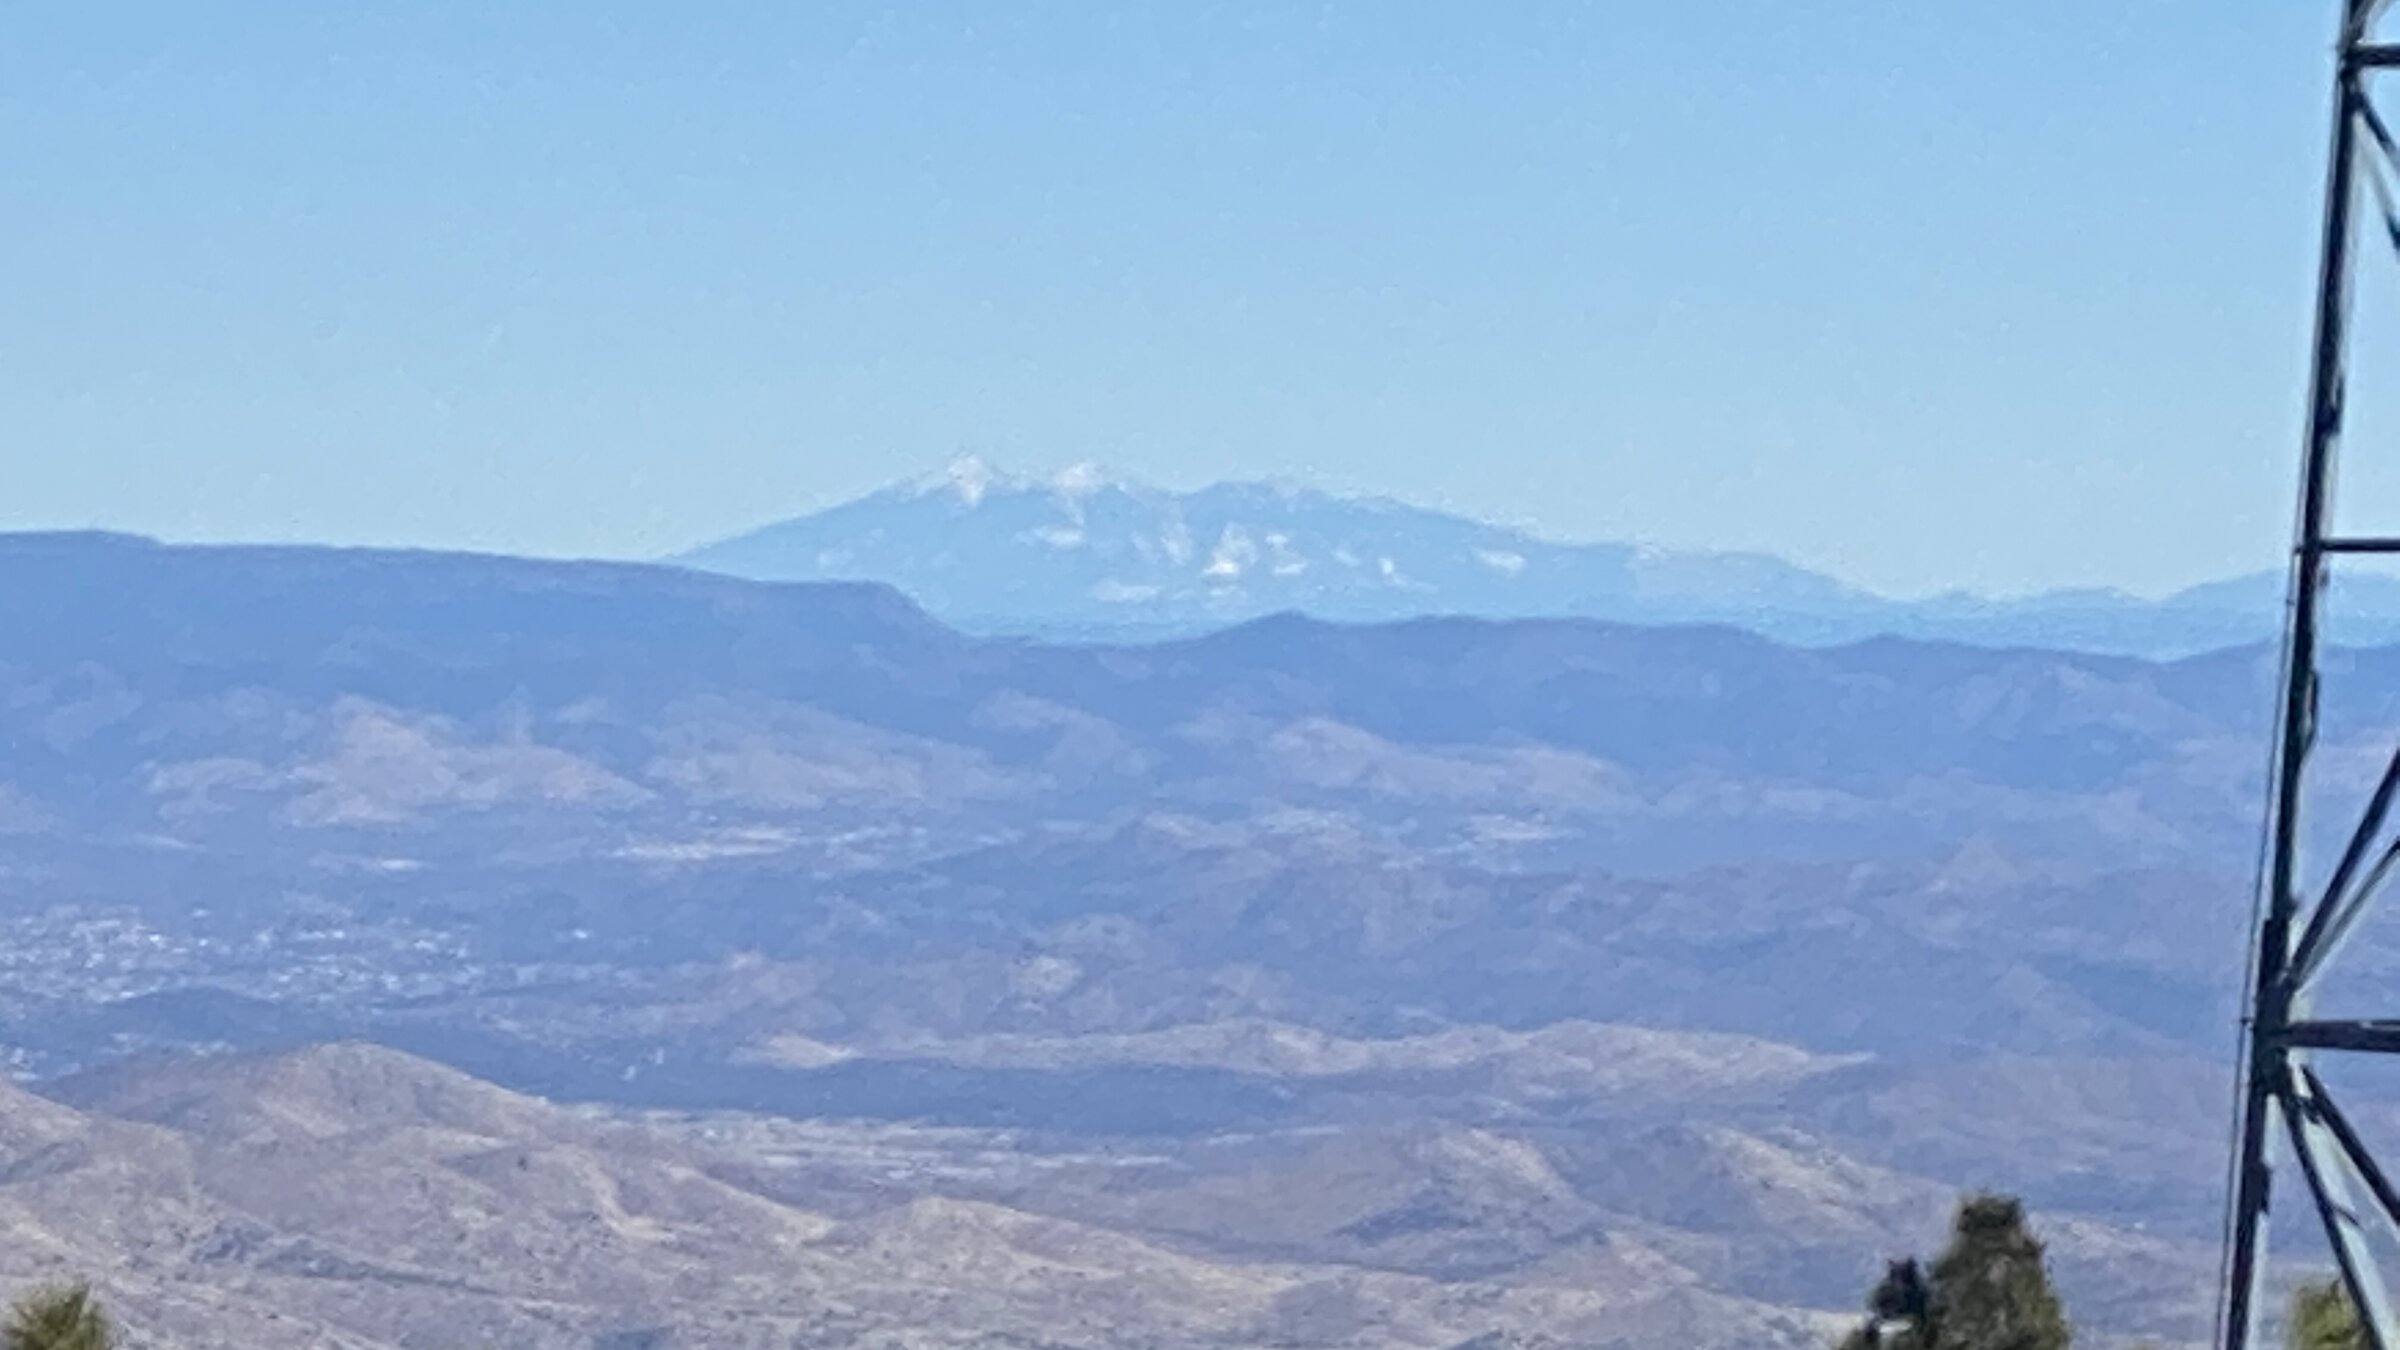 Jeep Gladiator Tower Mountain, AZ 4F020BB5-995C-4AF9-9BF5-6766FD2B3D05